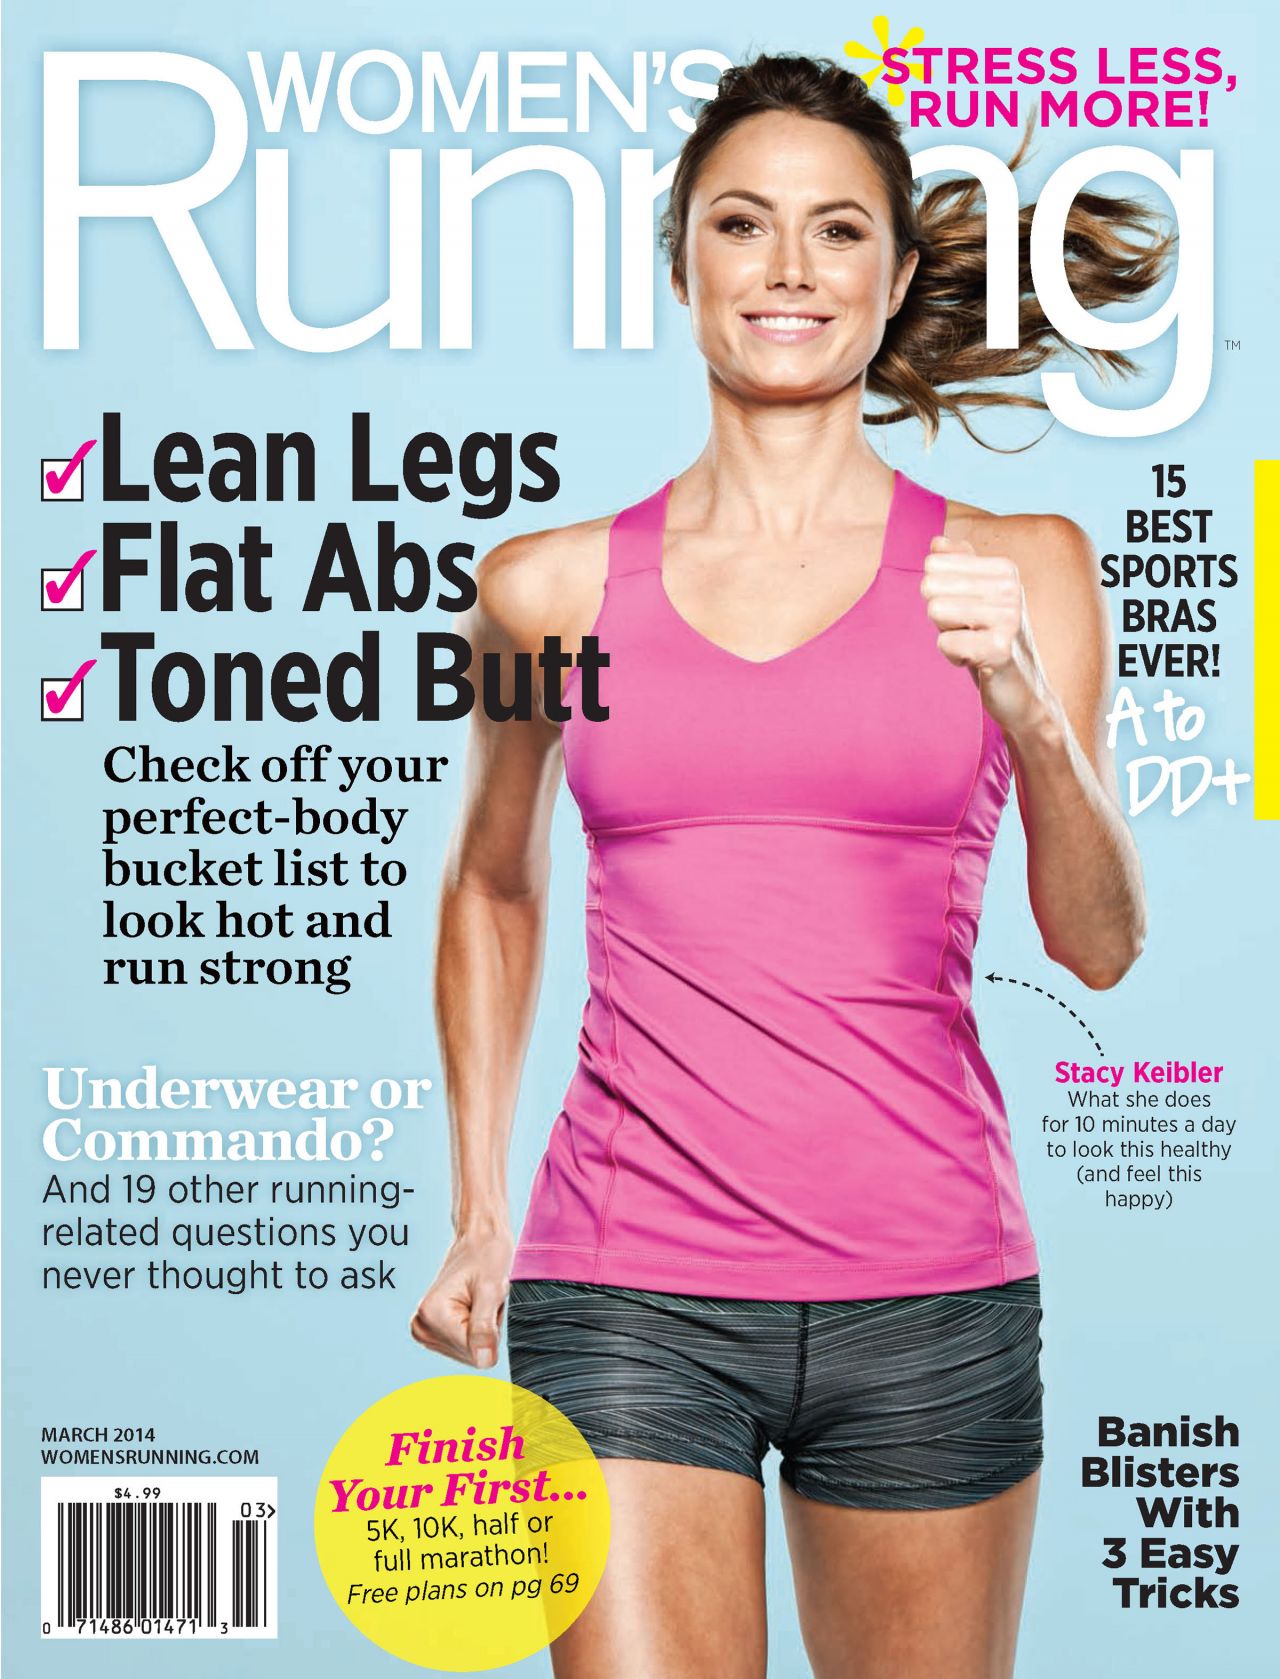 stacy-keibler-women-s-running-magazine-march-2014-cover_1.jpg